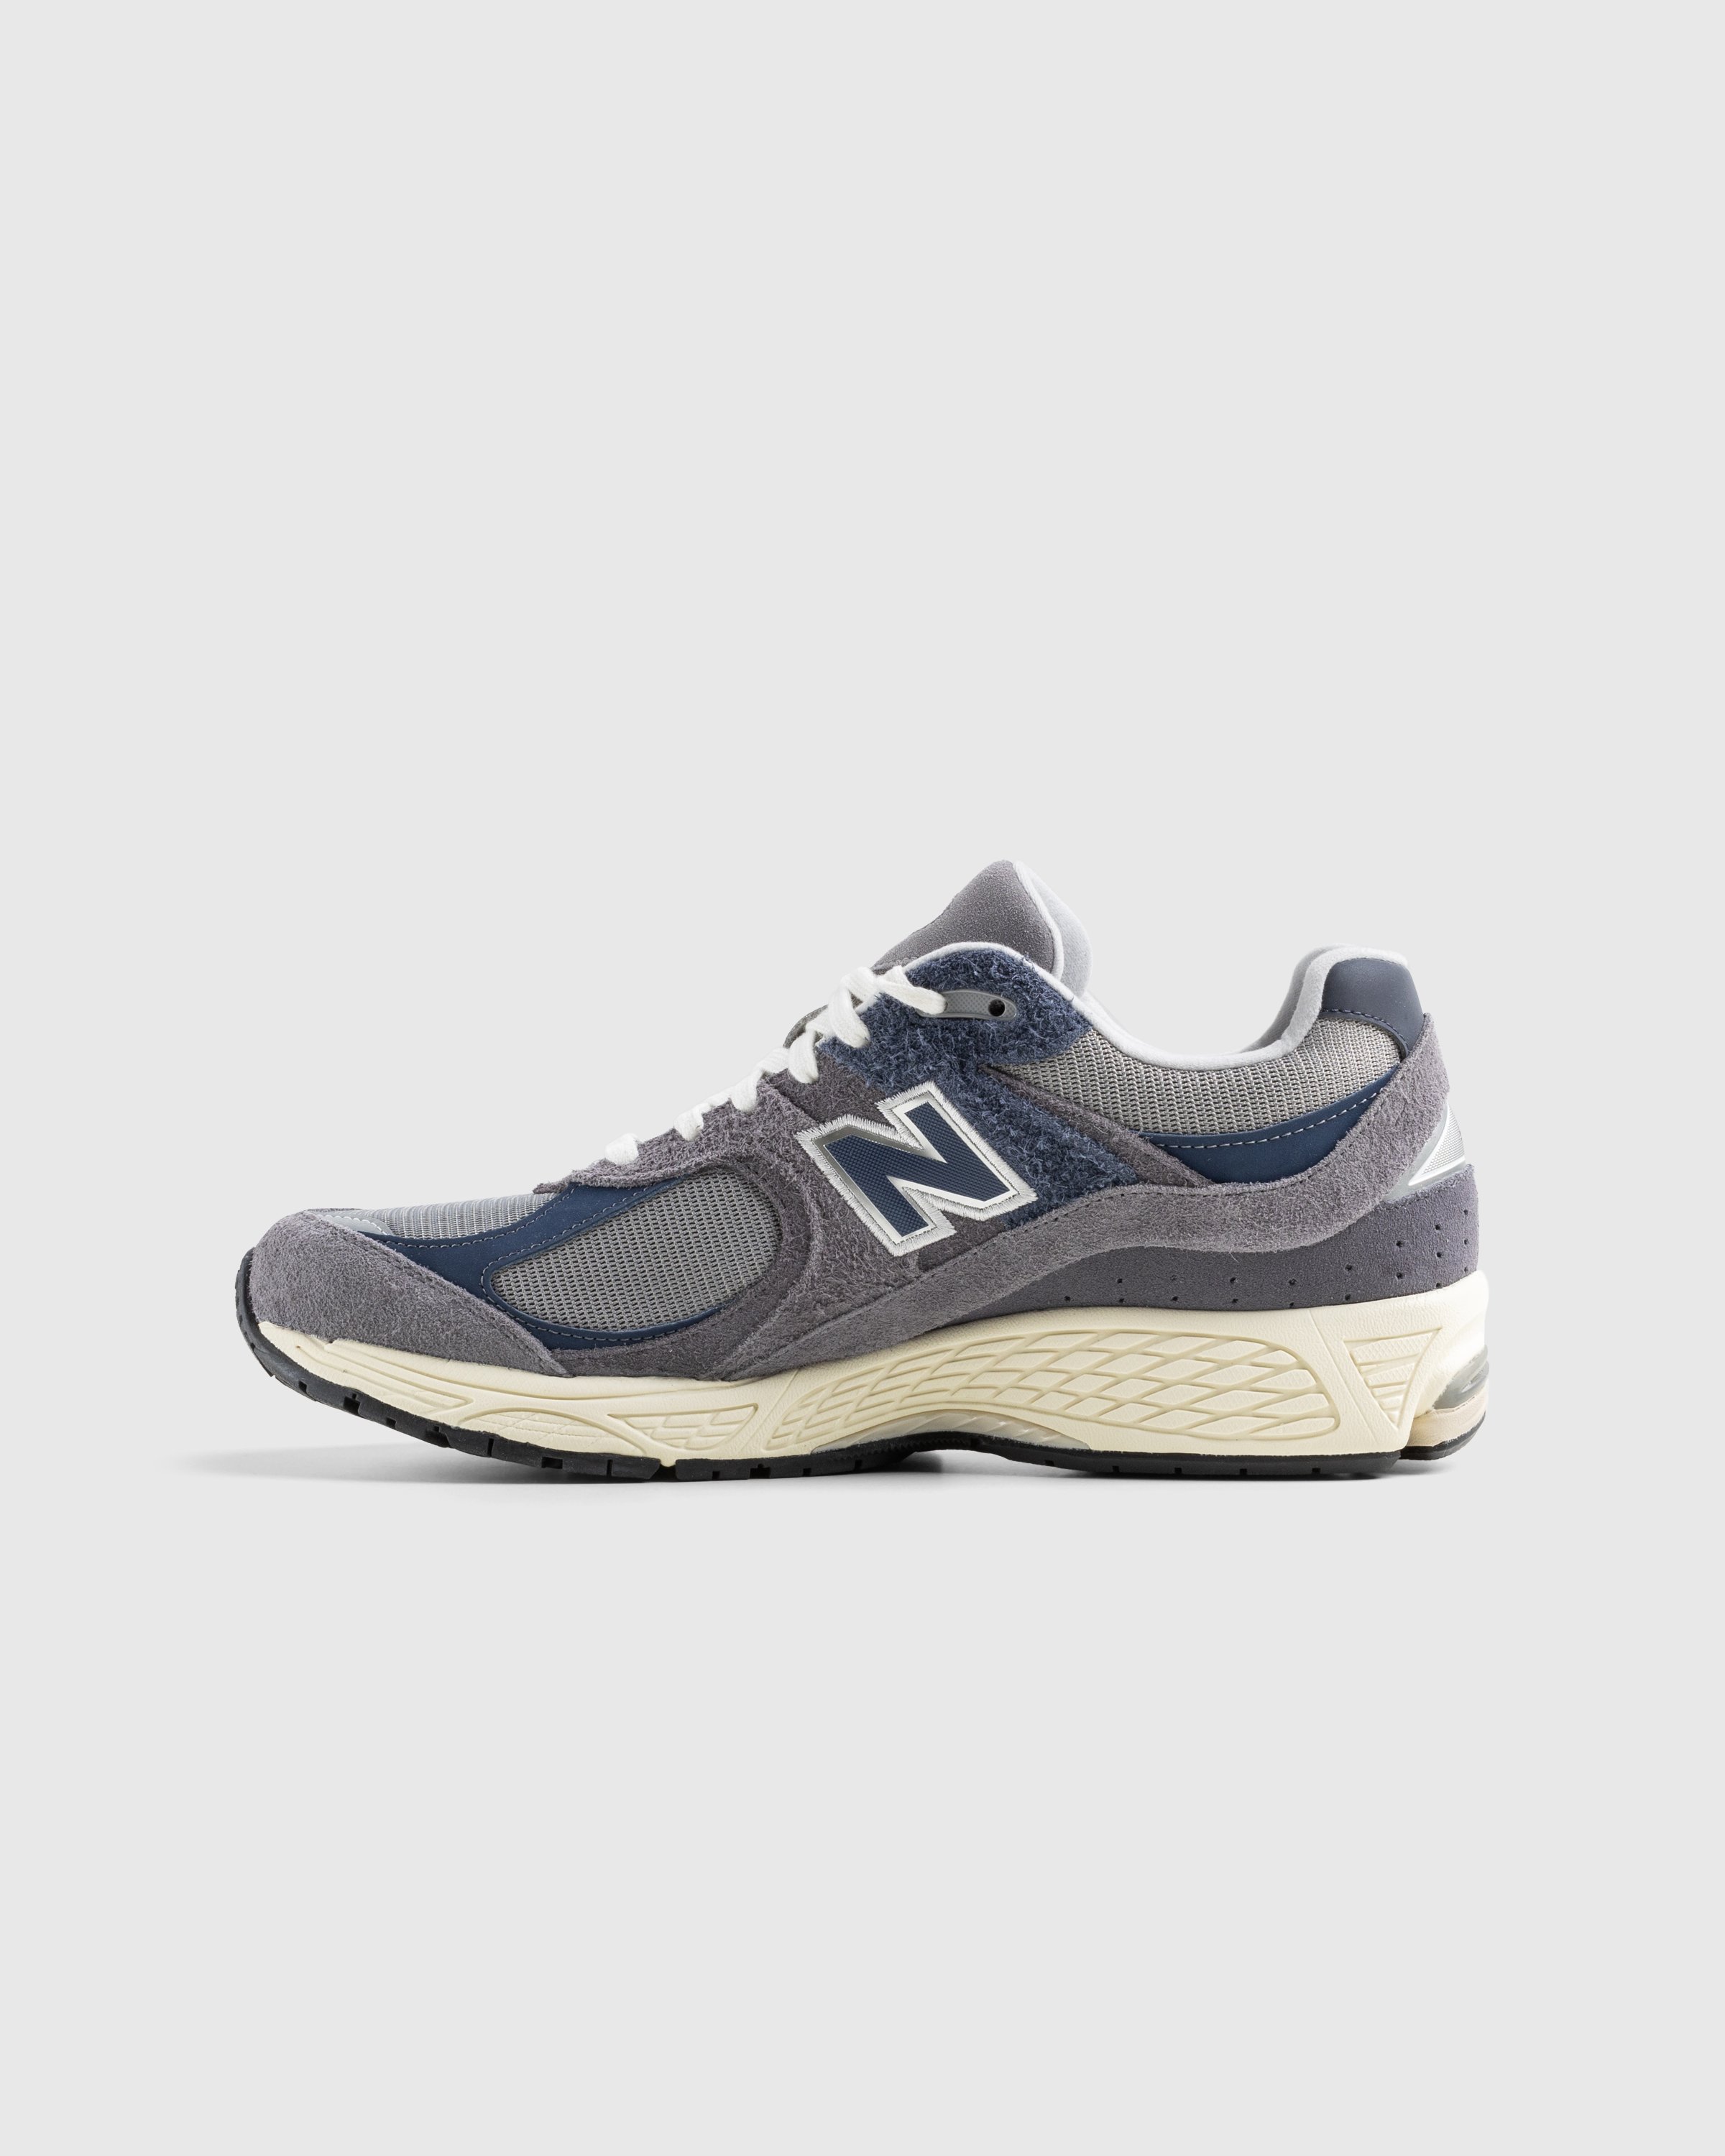 New Balance - M2002REL NB NAVY - Footwear - Blue - Image 2